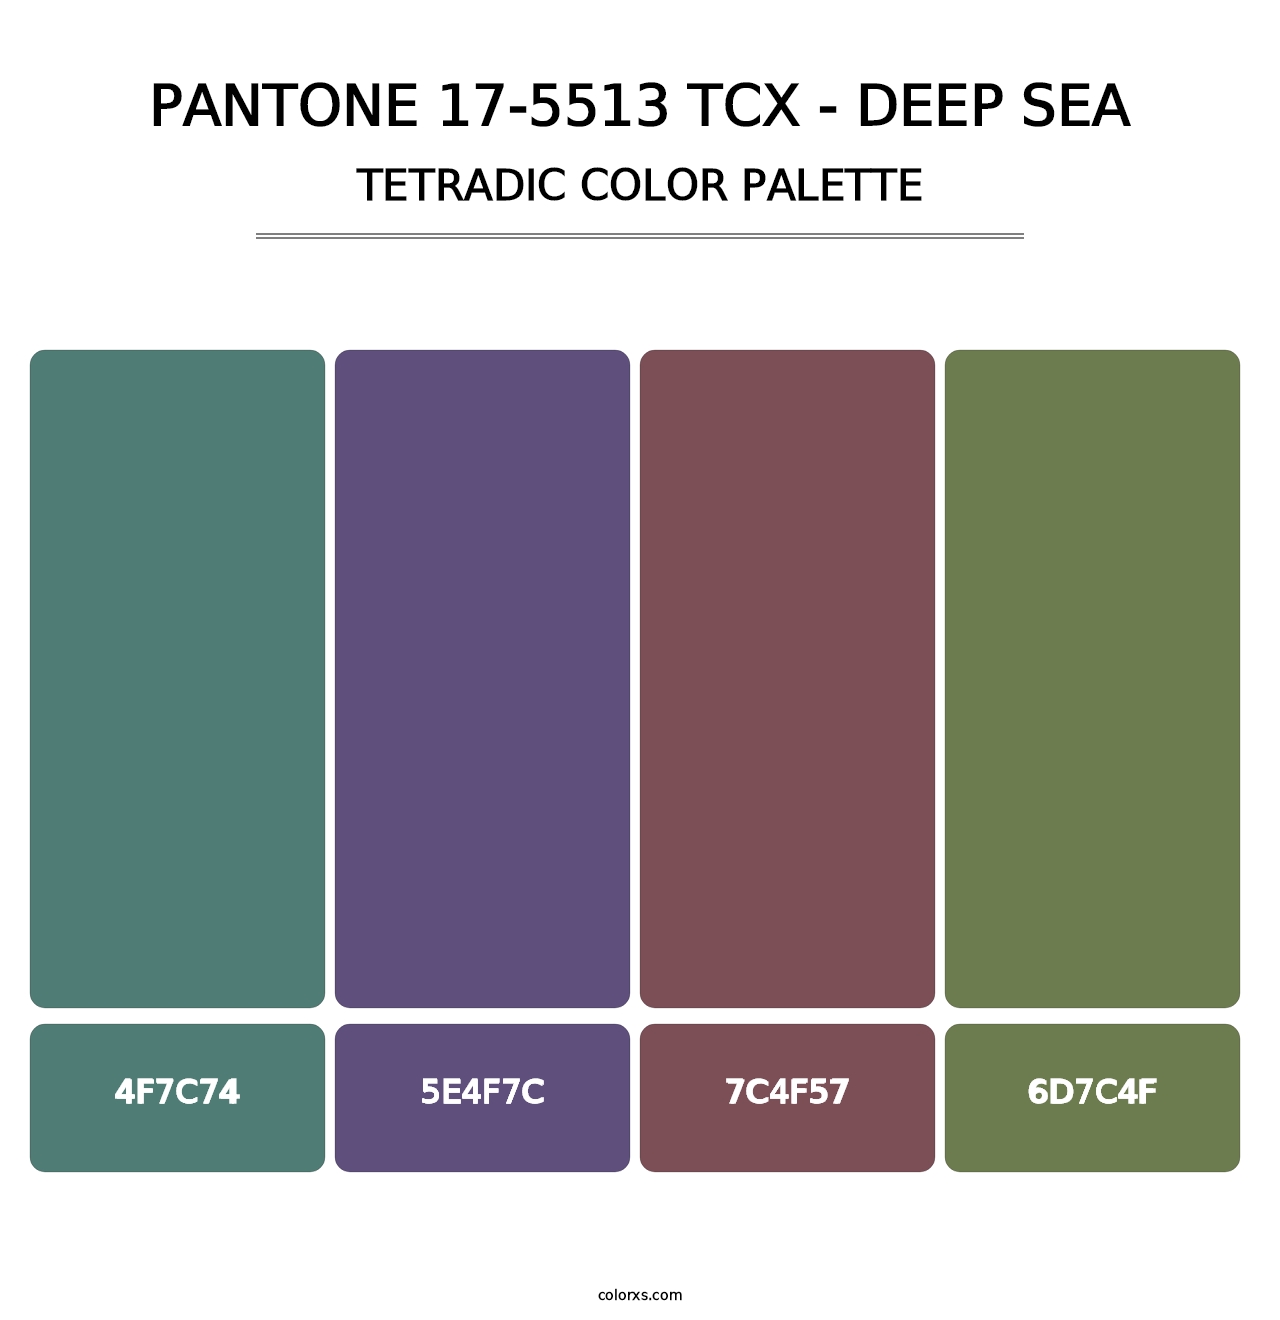 PANTONE 17-5513 TCX - Deep Sea - Tetradic Color Palette